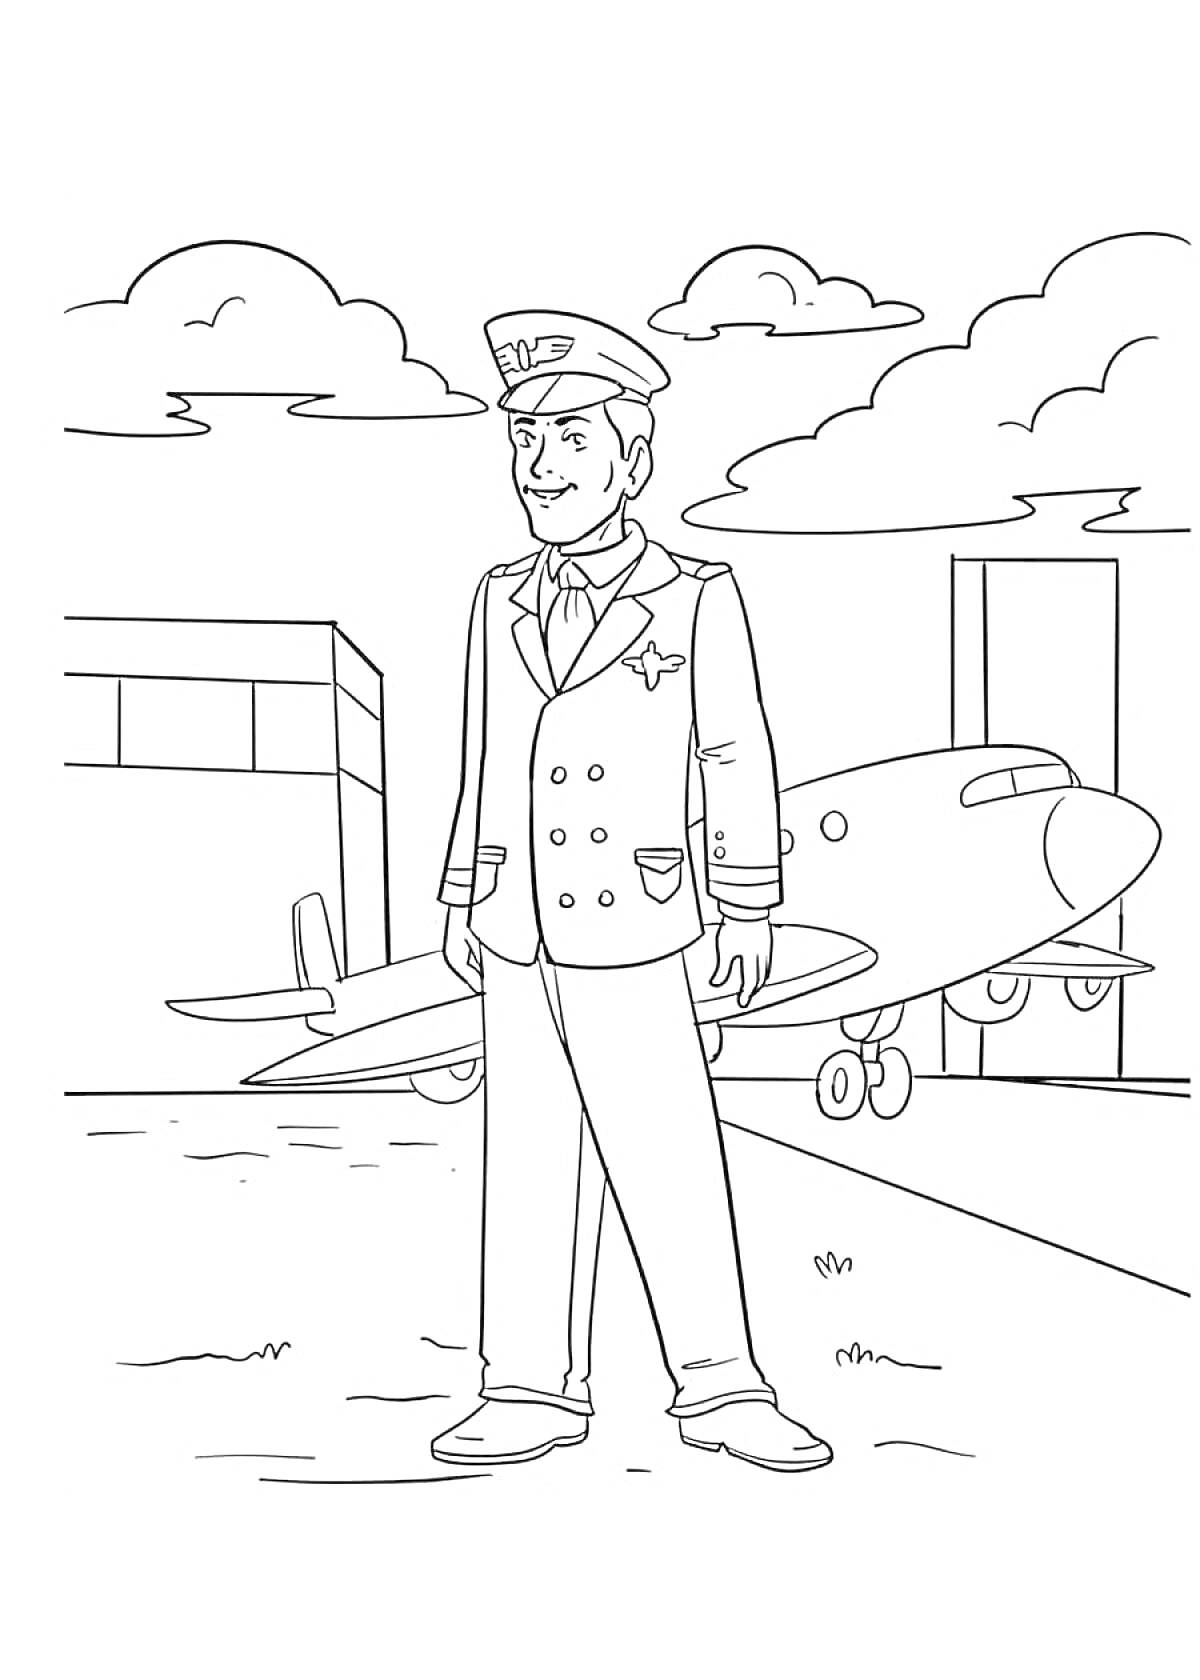 Раскраска Пилот на аэродроме с самолётом и зданиями на фоне